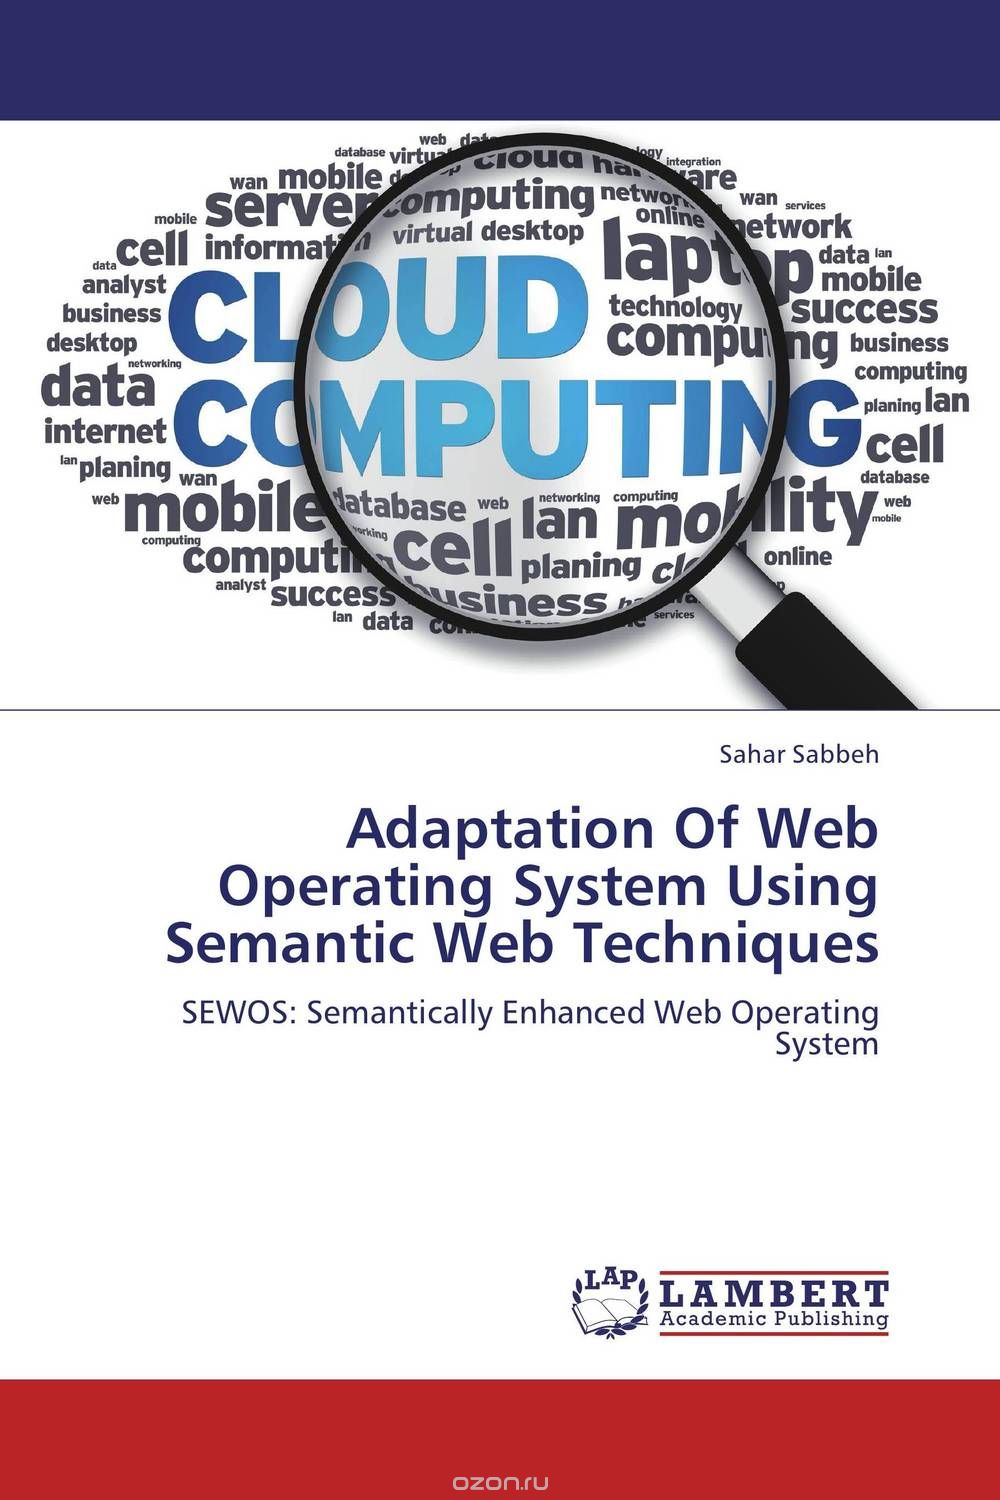 Скачать книгу "Adaptation Of Web Operating System Using Semantic Web Techniques"